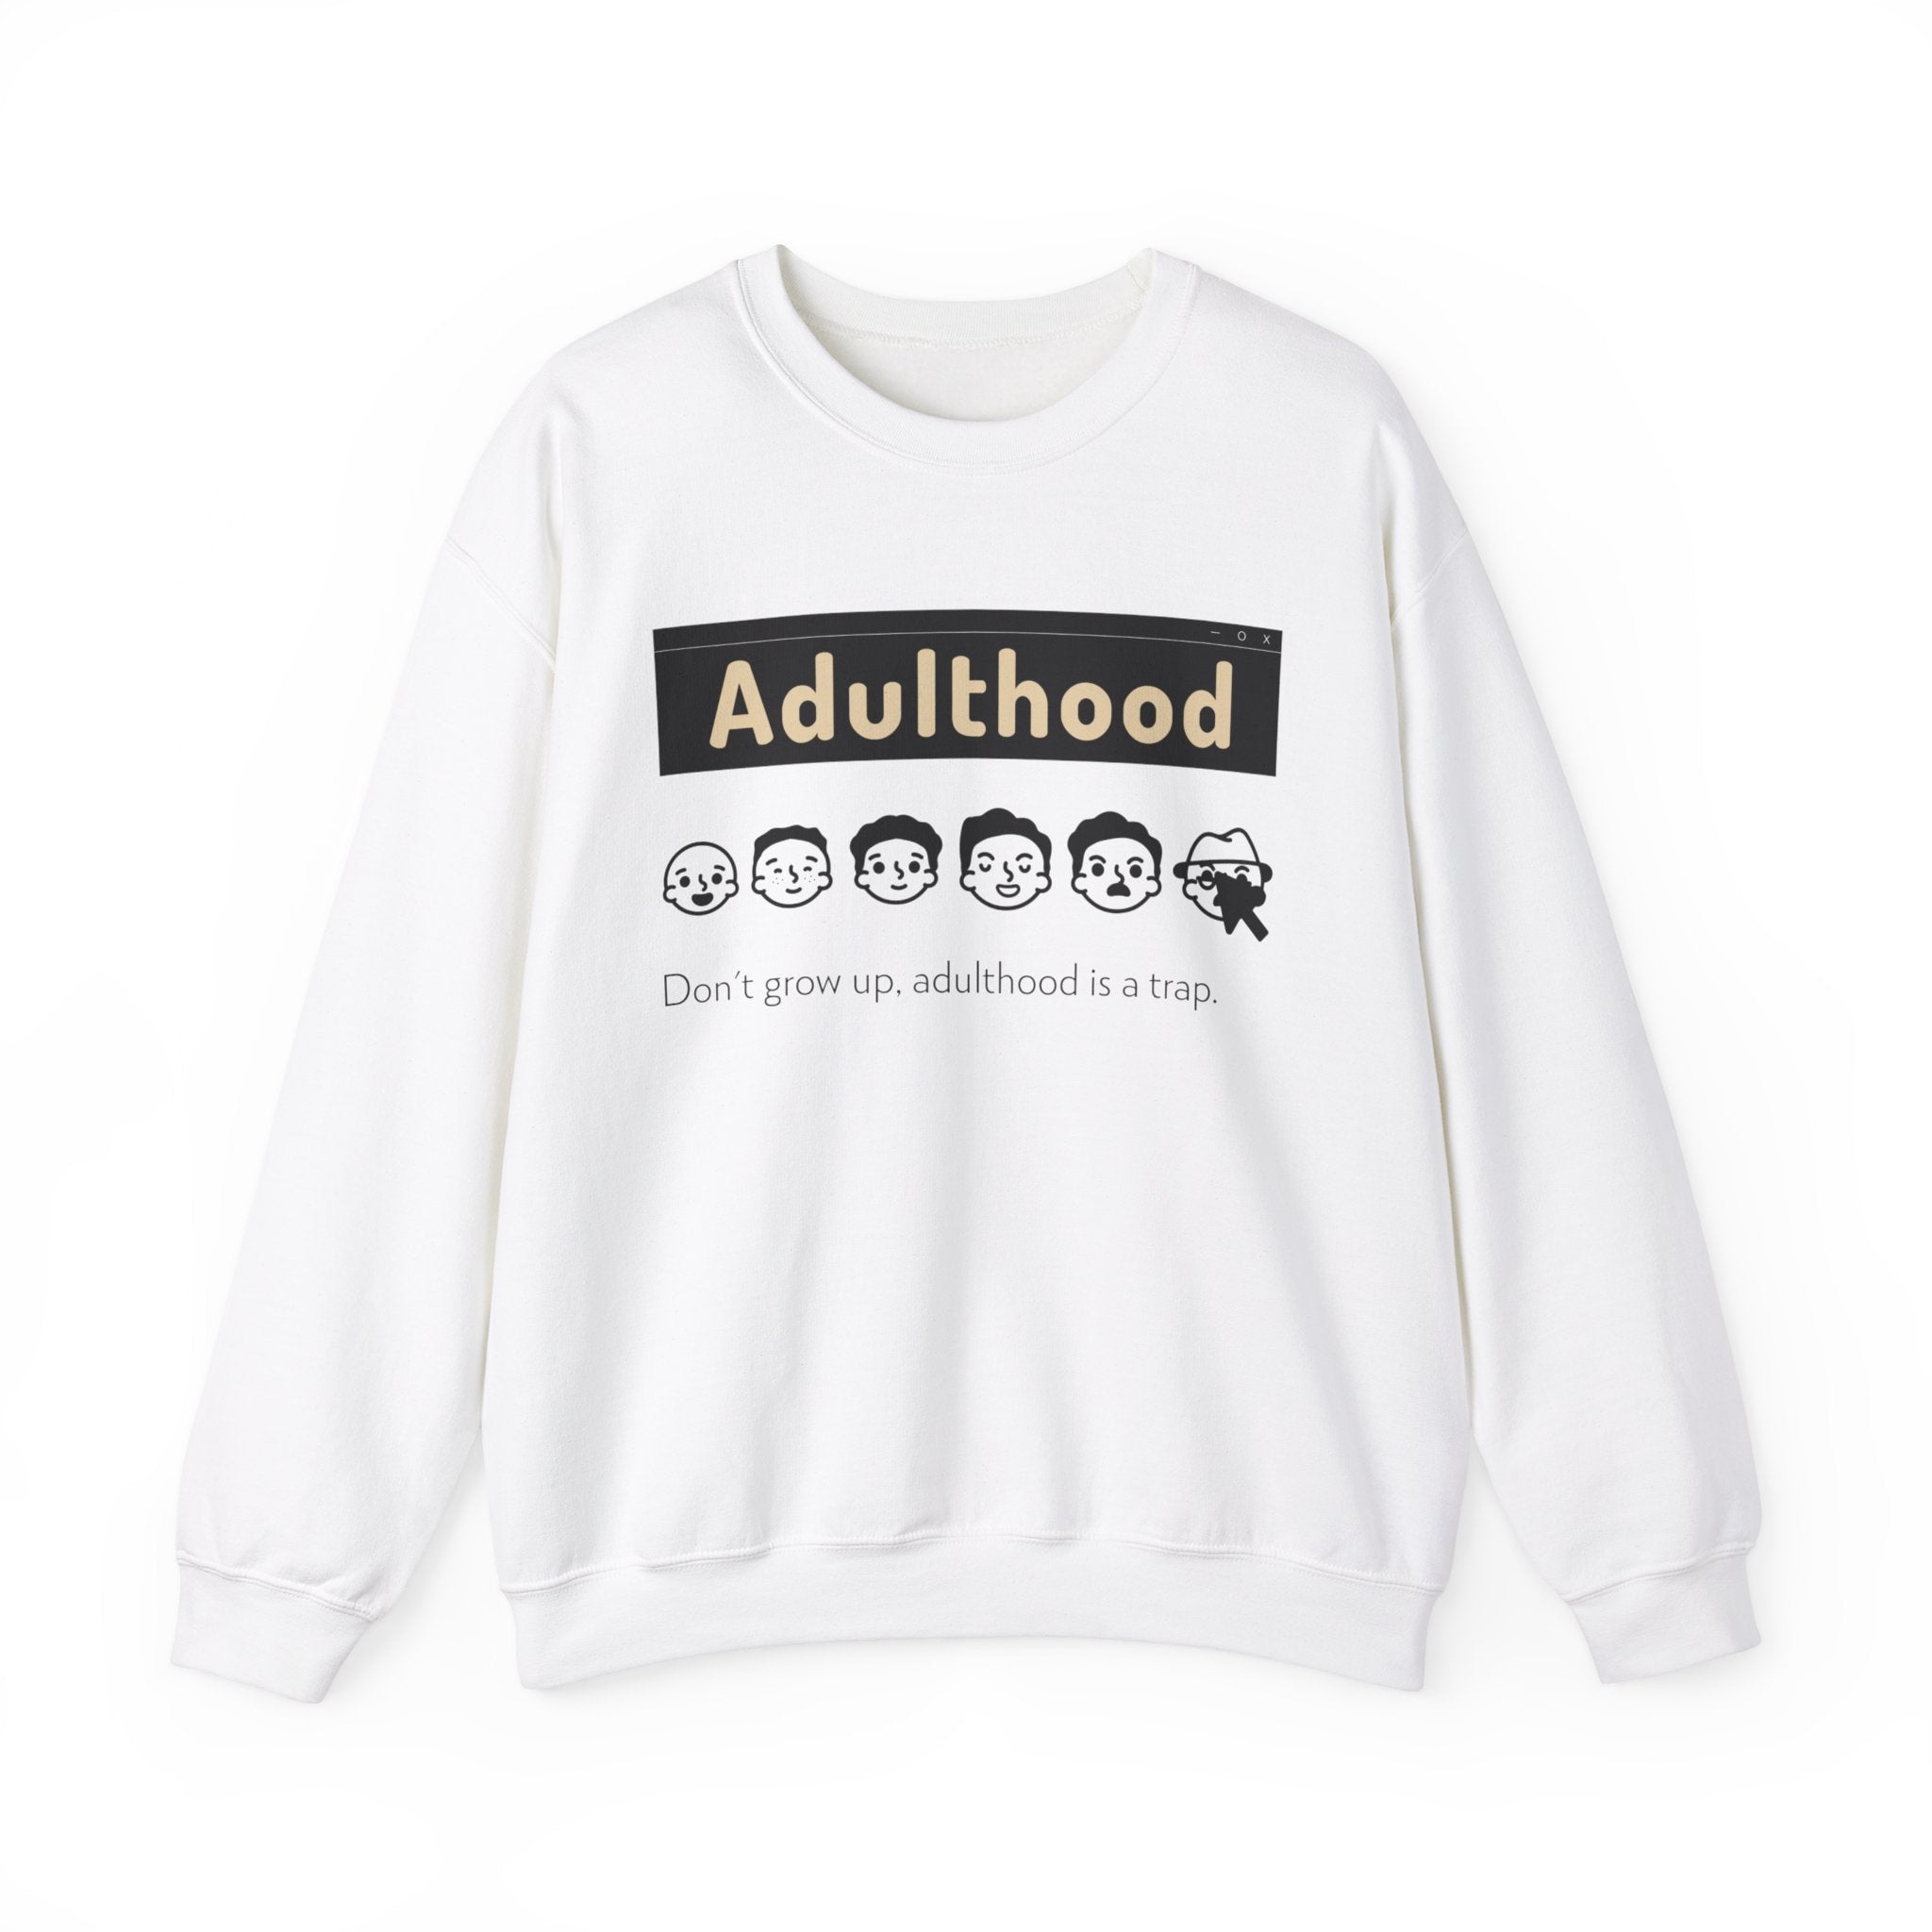 Adulthood is a Trap -  Sweatshirt